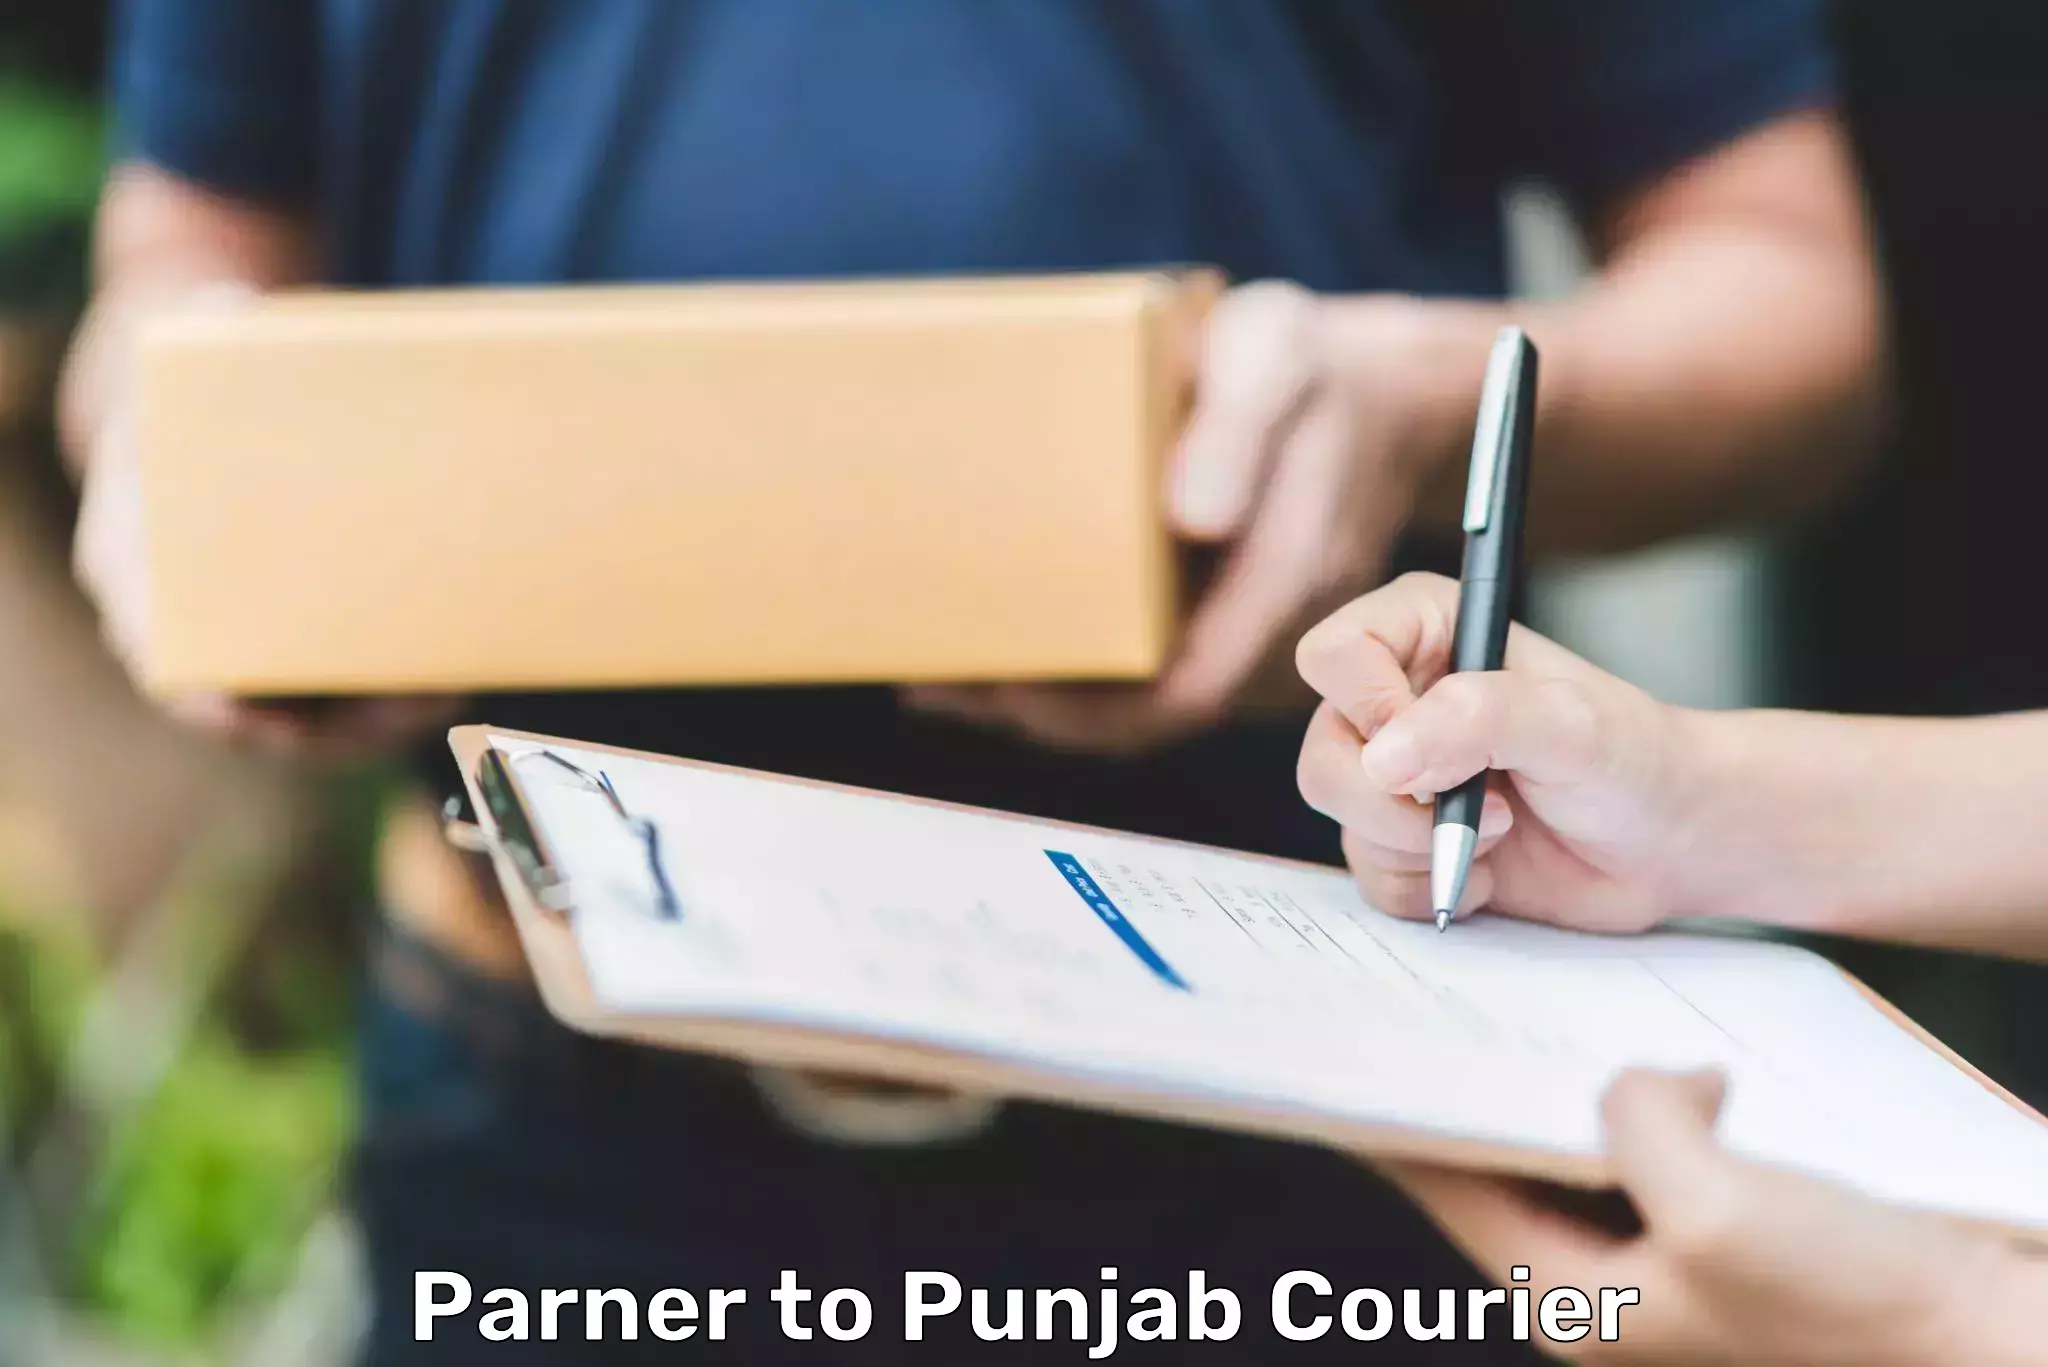 User-friendly delivery service Parner to Punjab